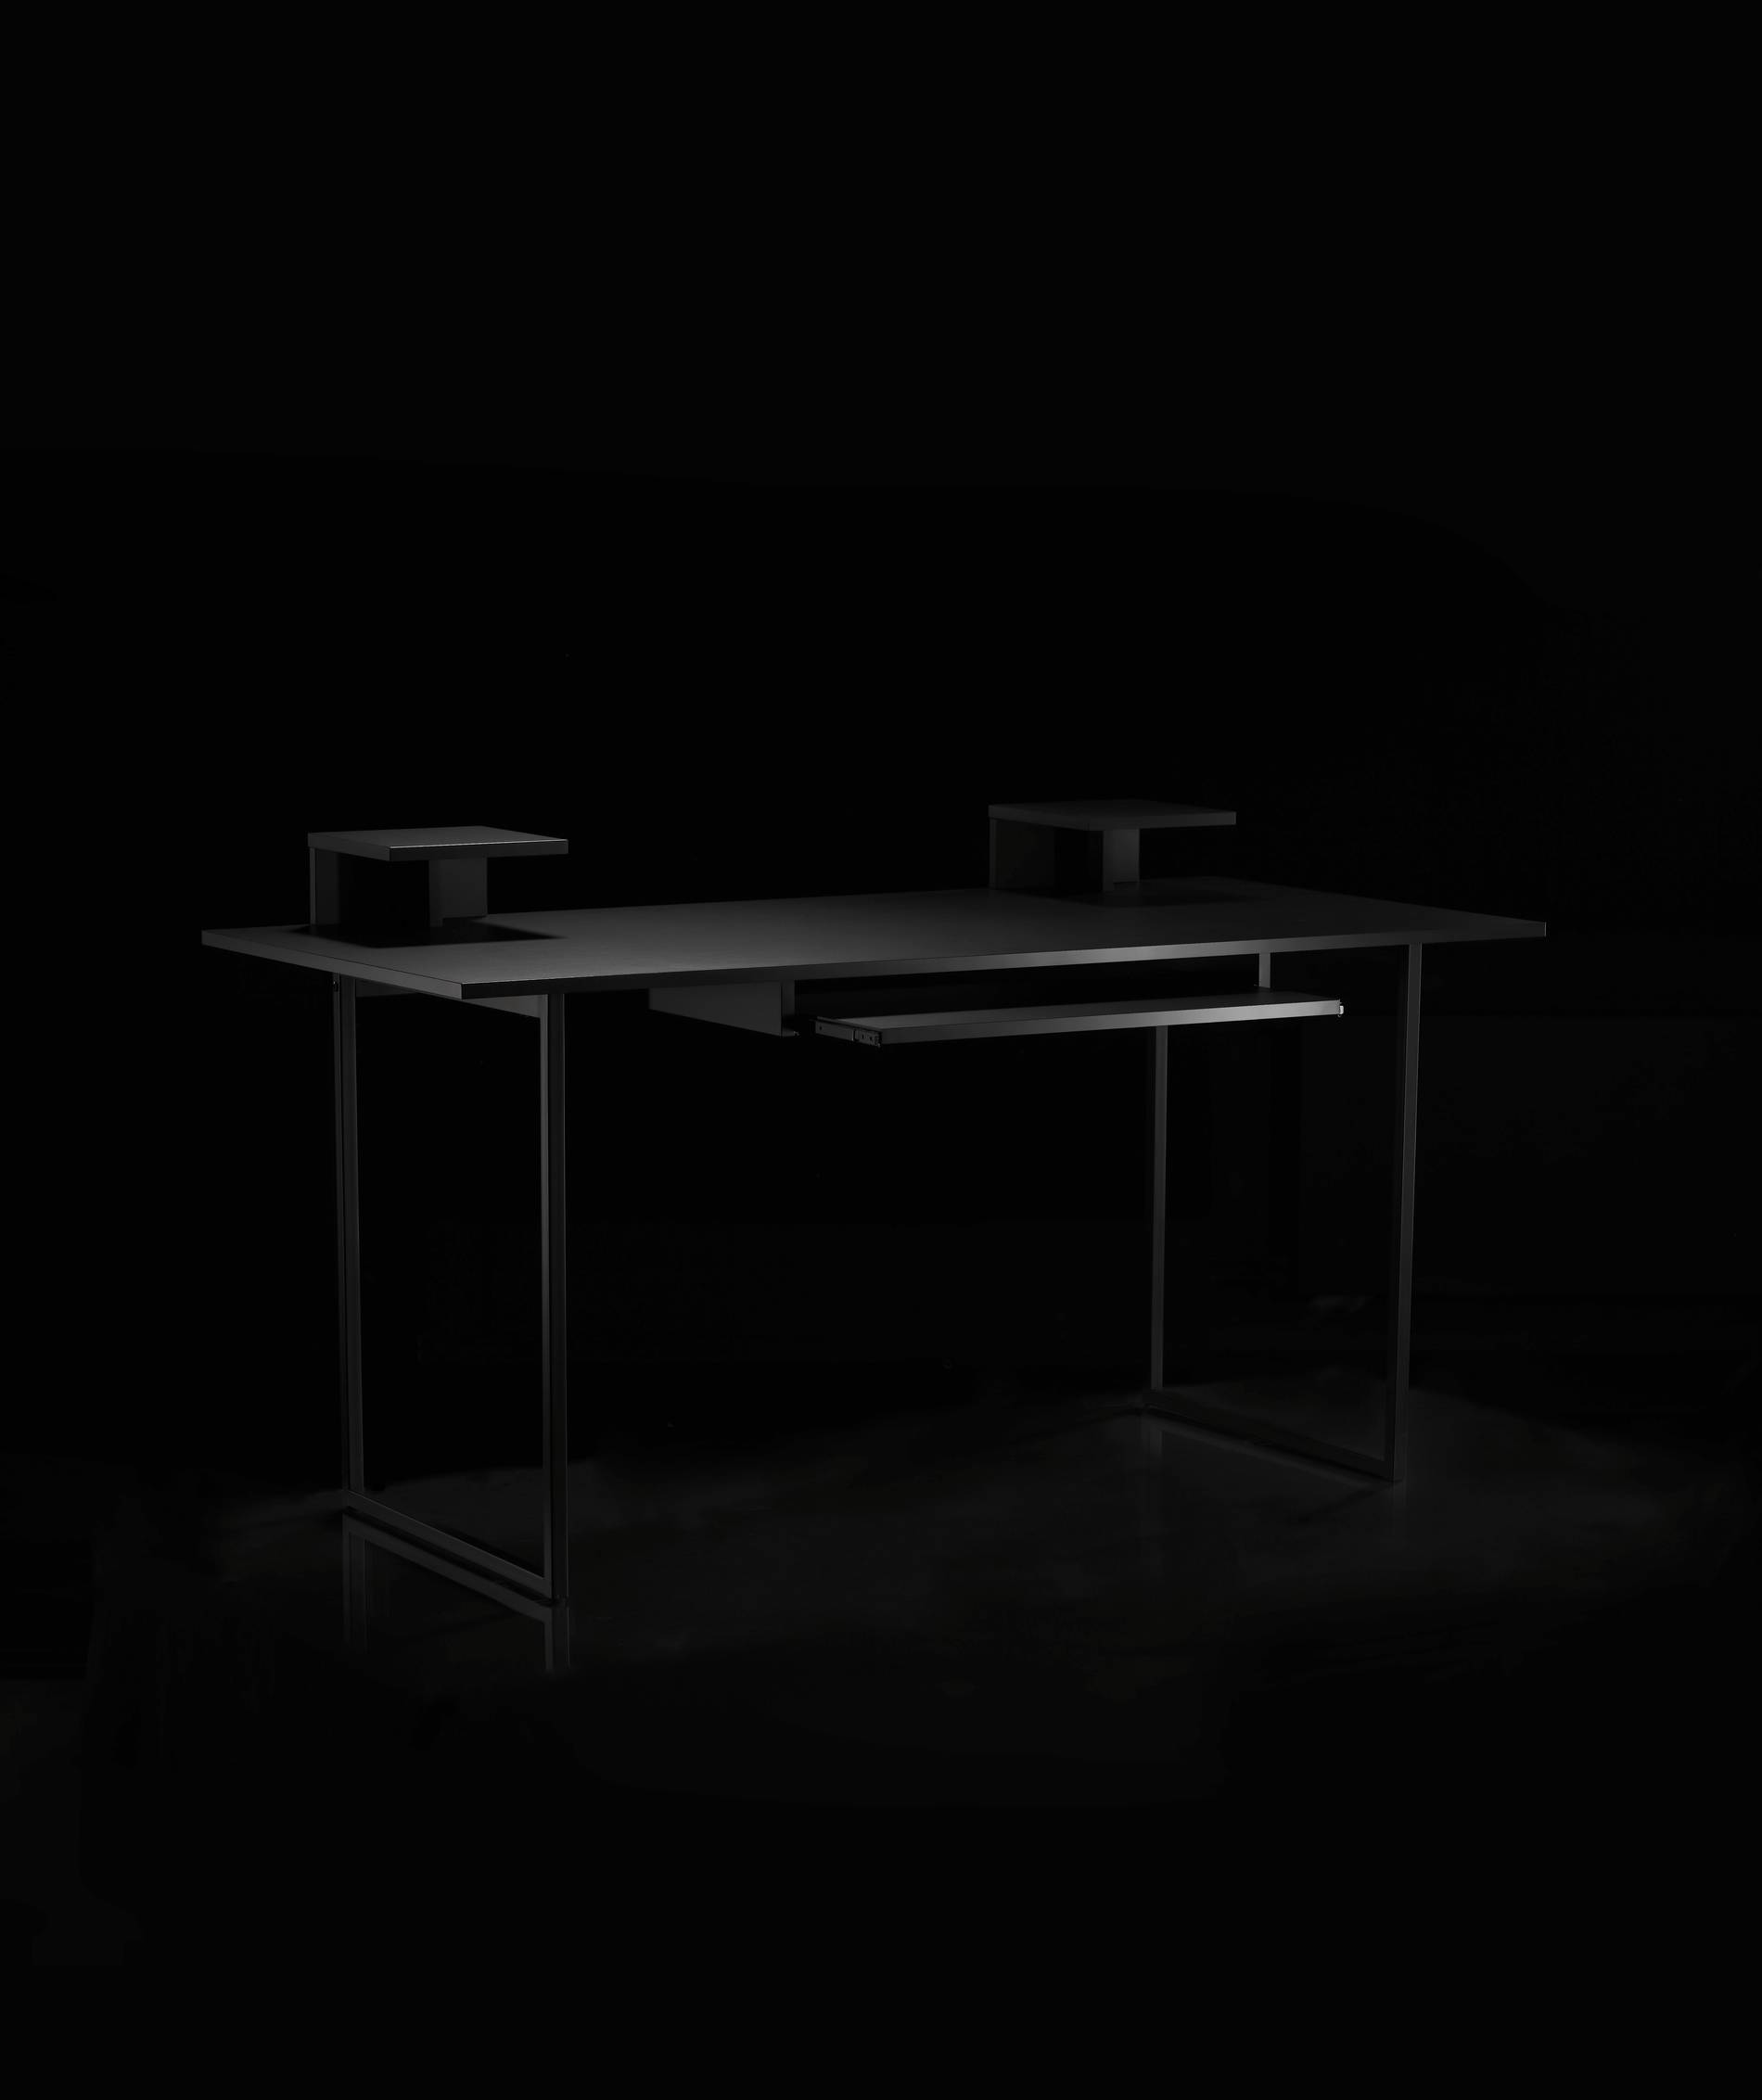 Swedish House Mafia for Ikea, Obergränsad collection desk design